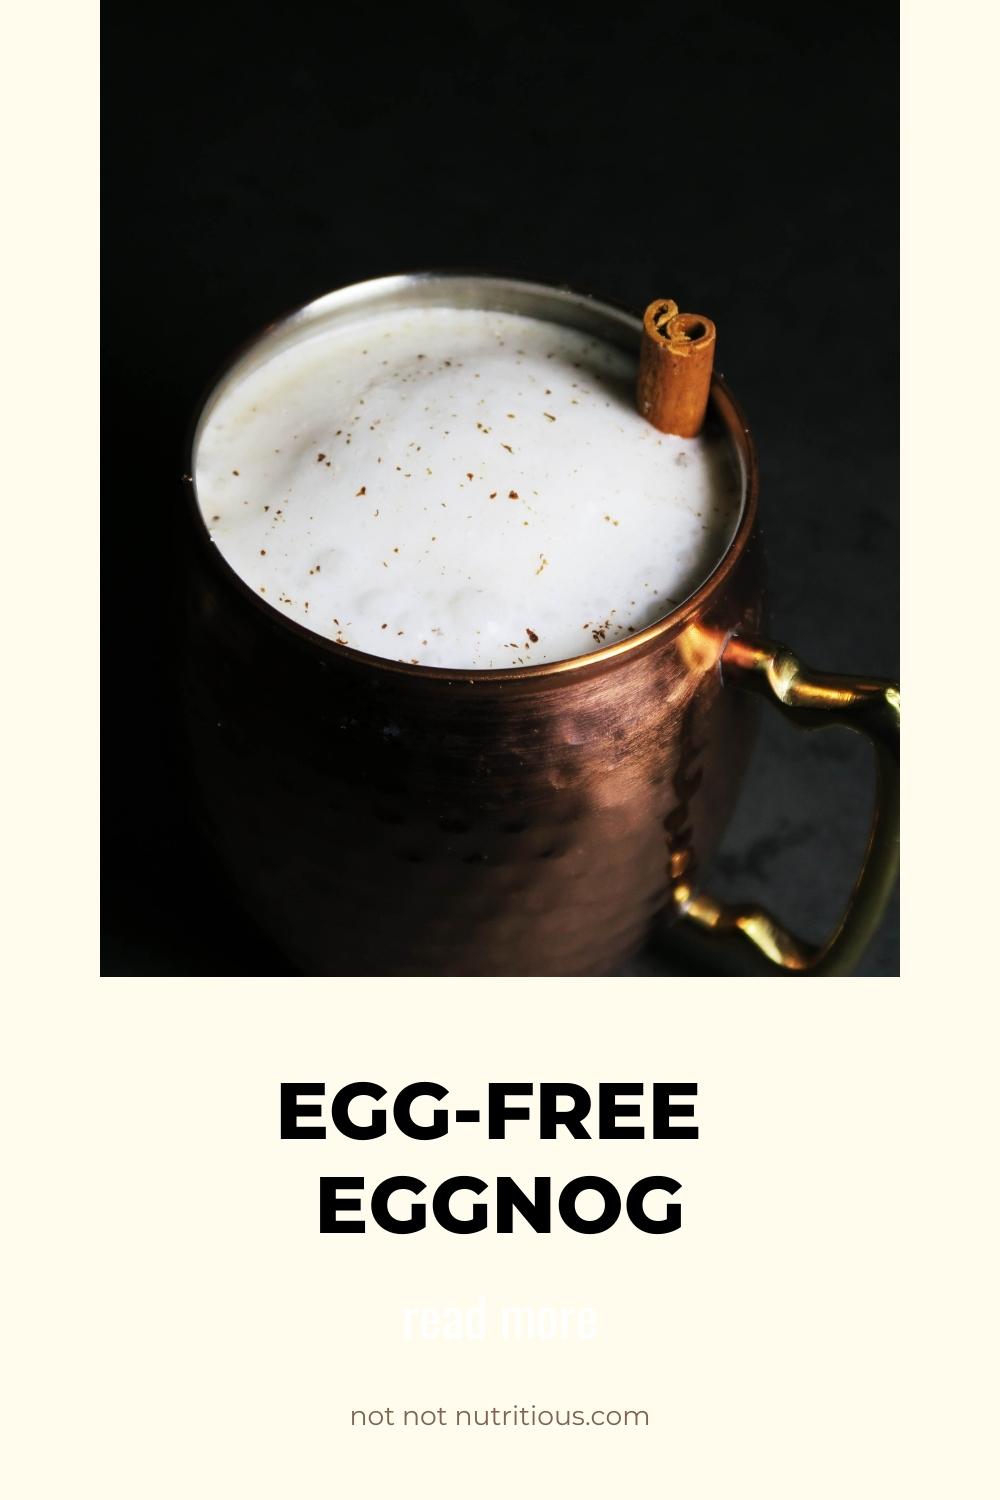 Pin for Egg-Free Eggnog with eggnog in a copper mug